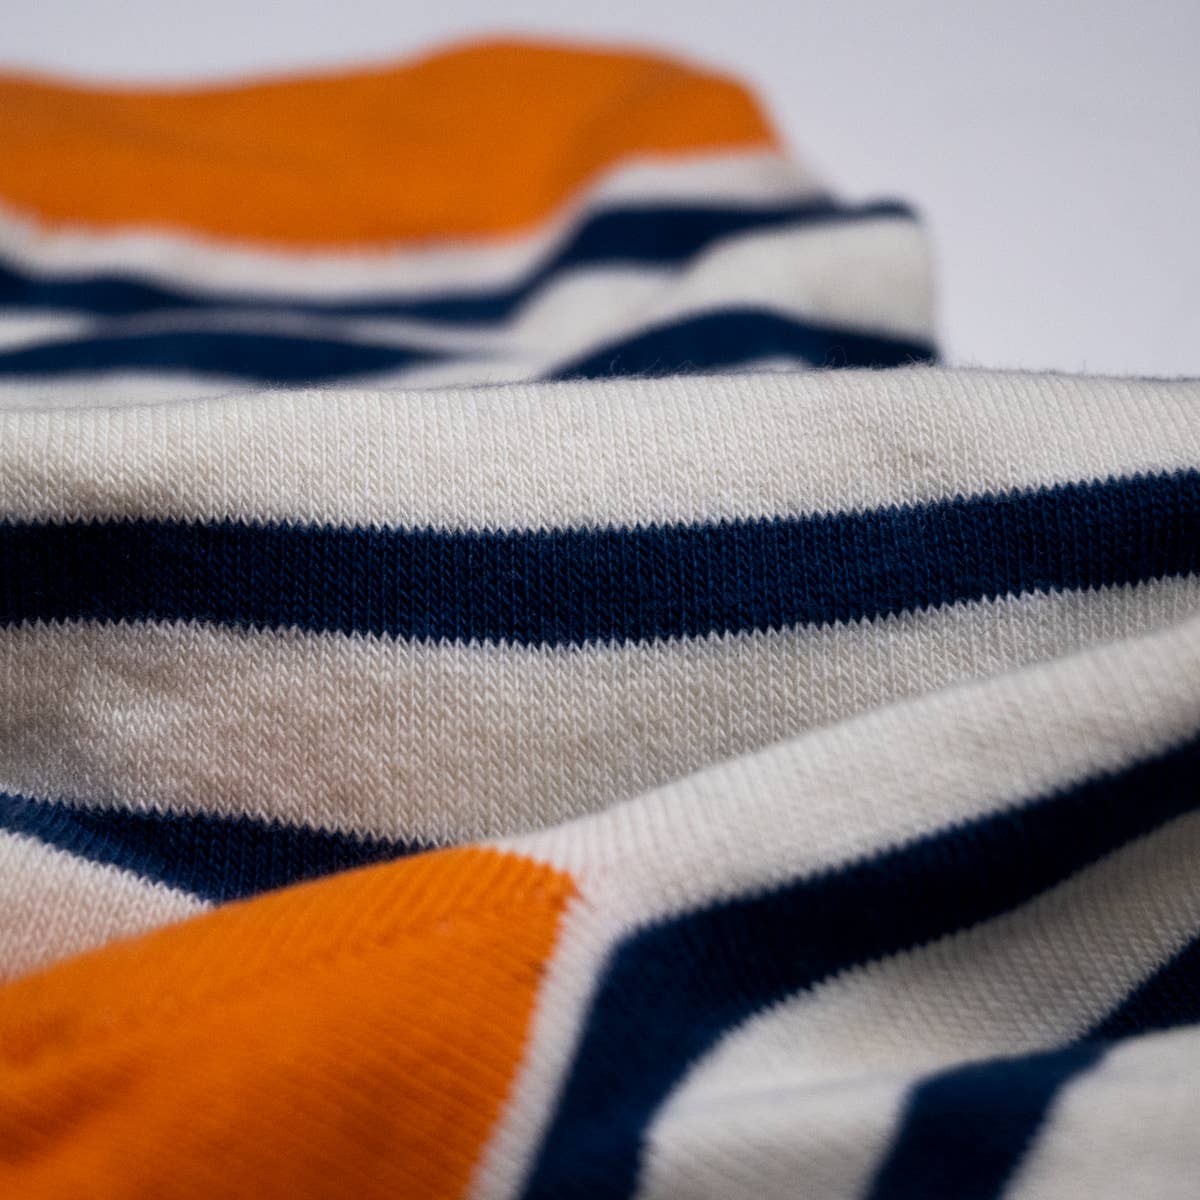 Wide ecru striped combed cotton socks